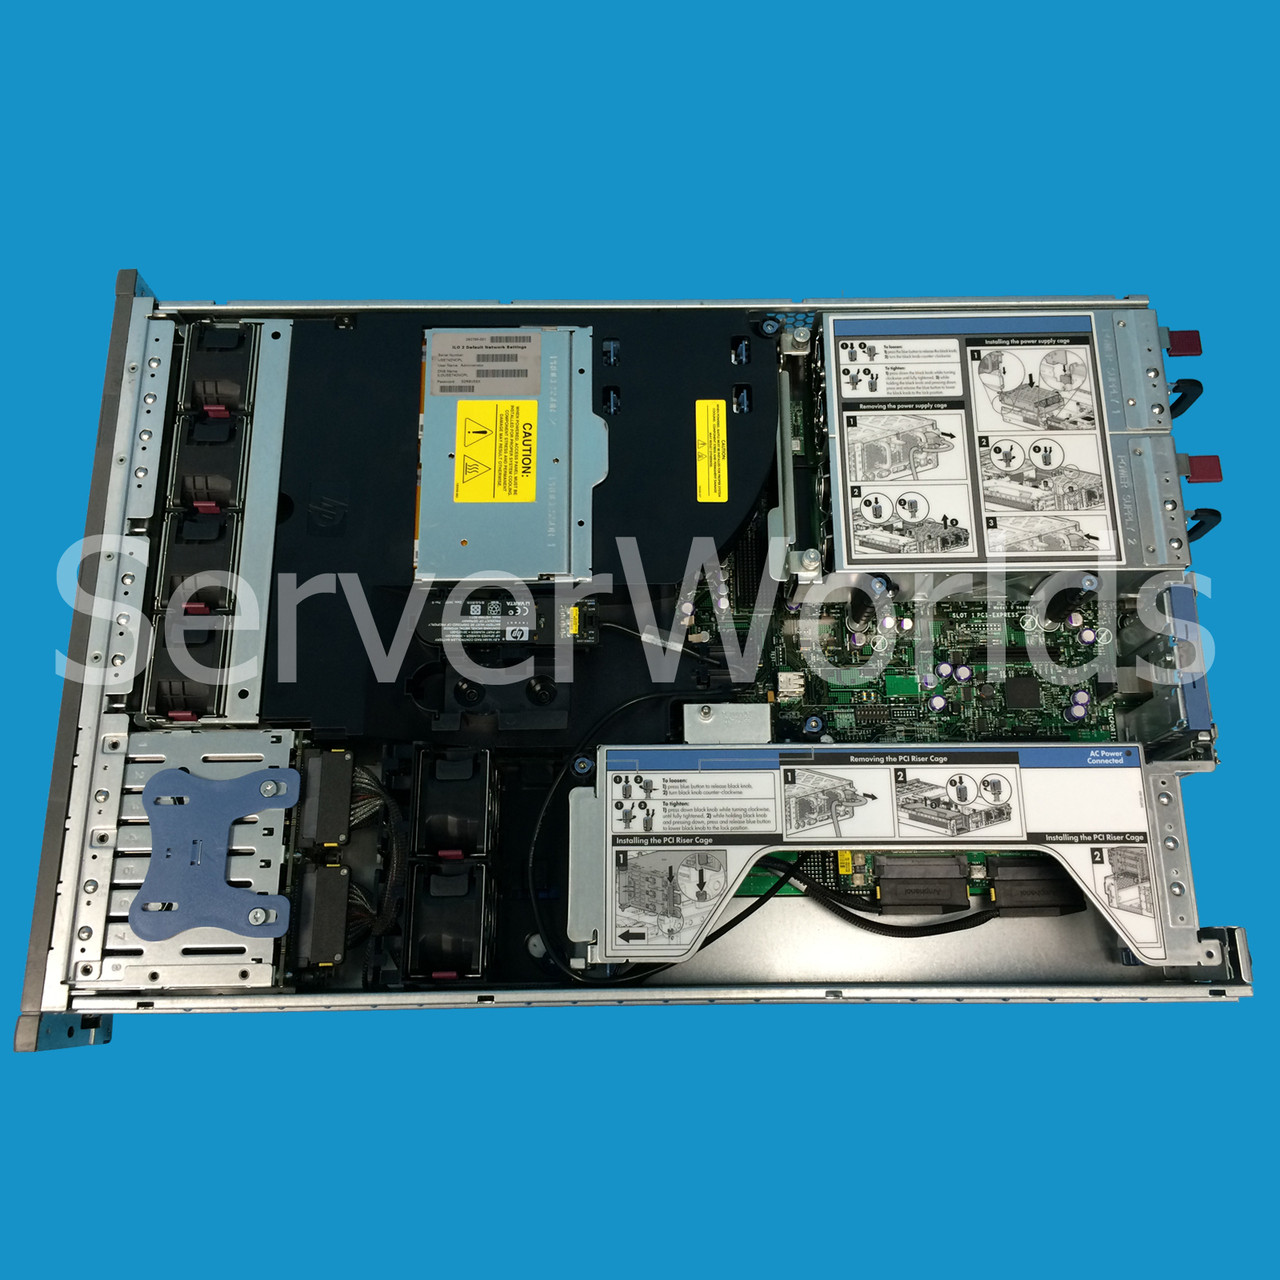 Refurbished HP DL380 G5 DC X5120 1.86Ghz 2GB 430027-005